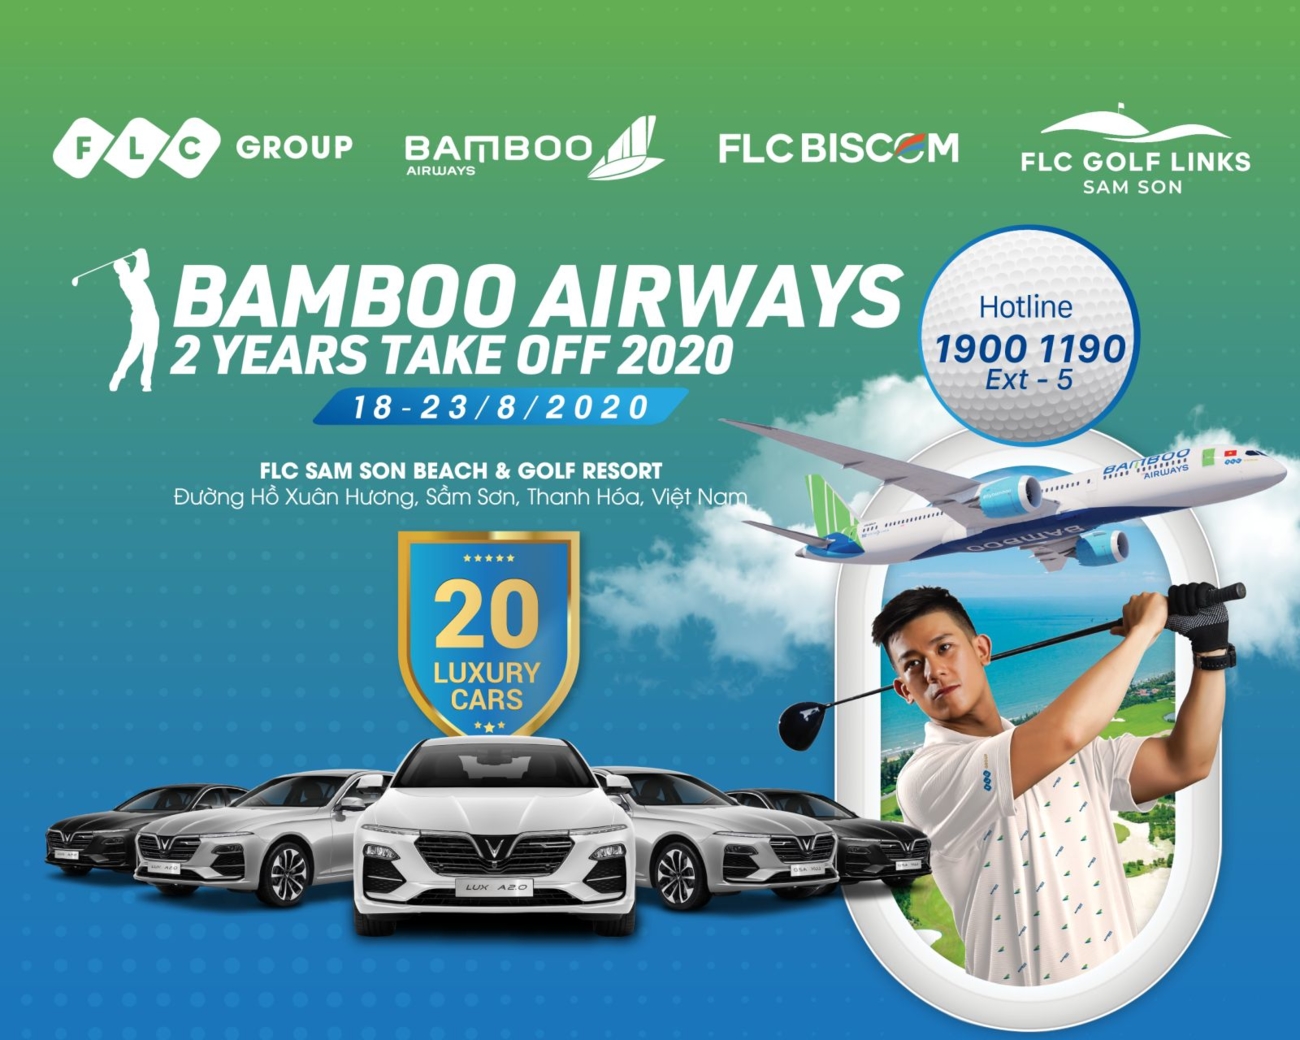 Bamboo-airways-2-years-take-off-2020-chuan-bi-khoi-tranh-phan-thuong-hio-la-20-xe-vinfast